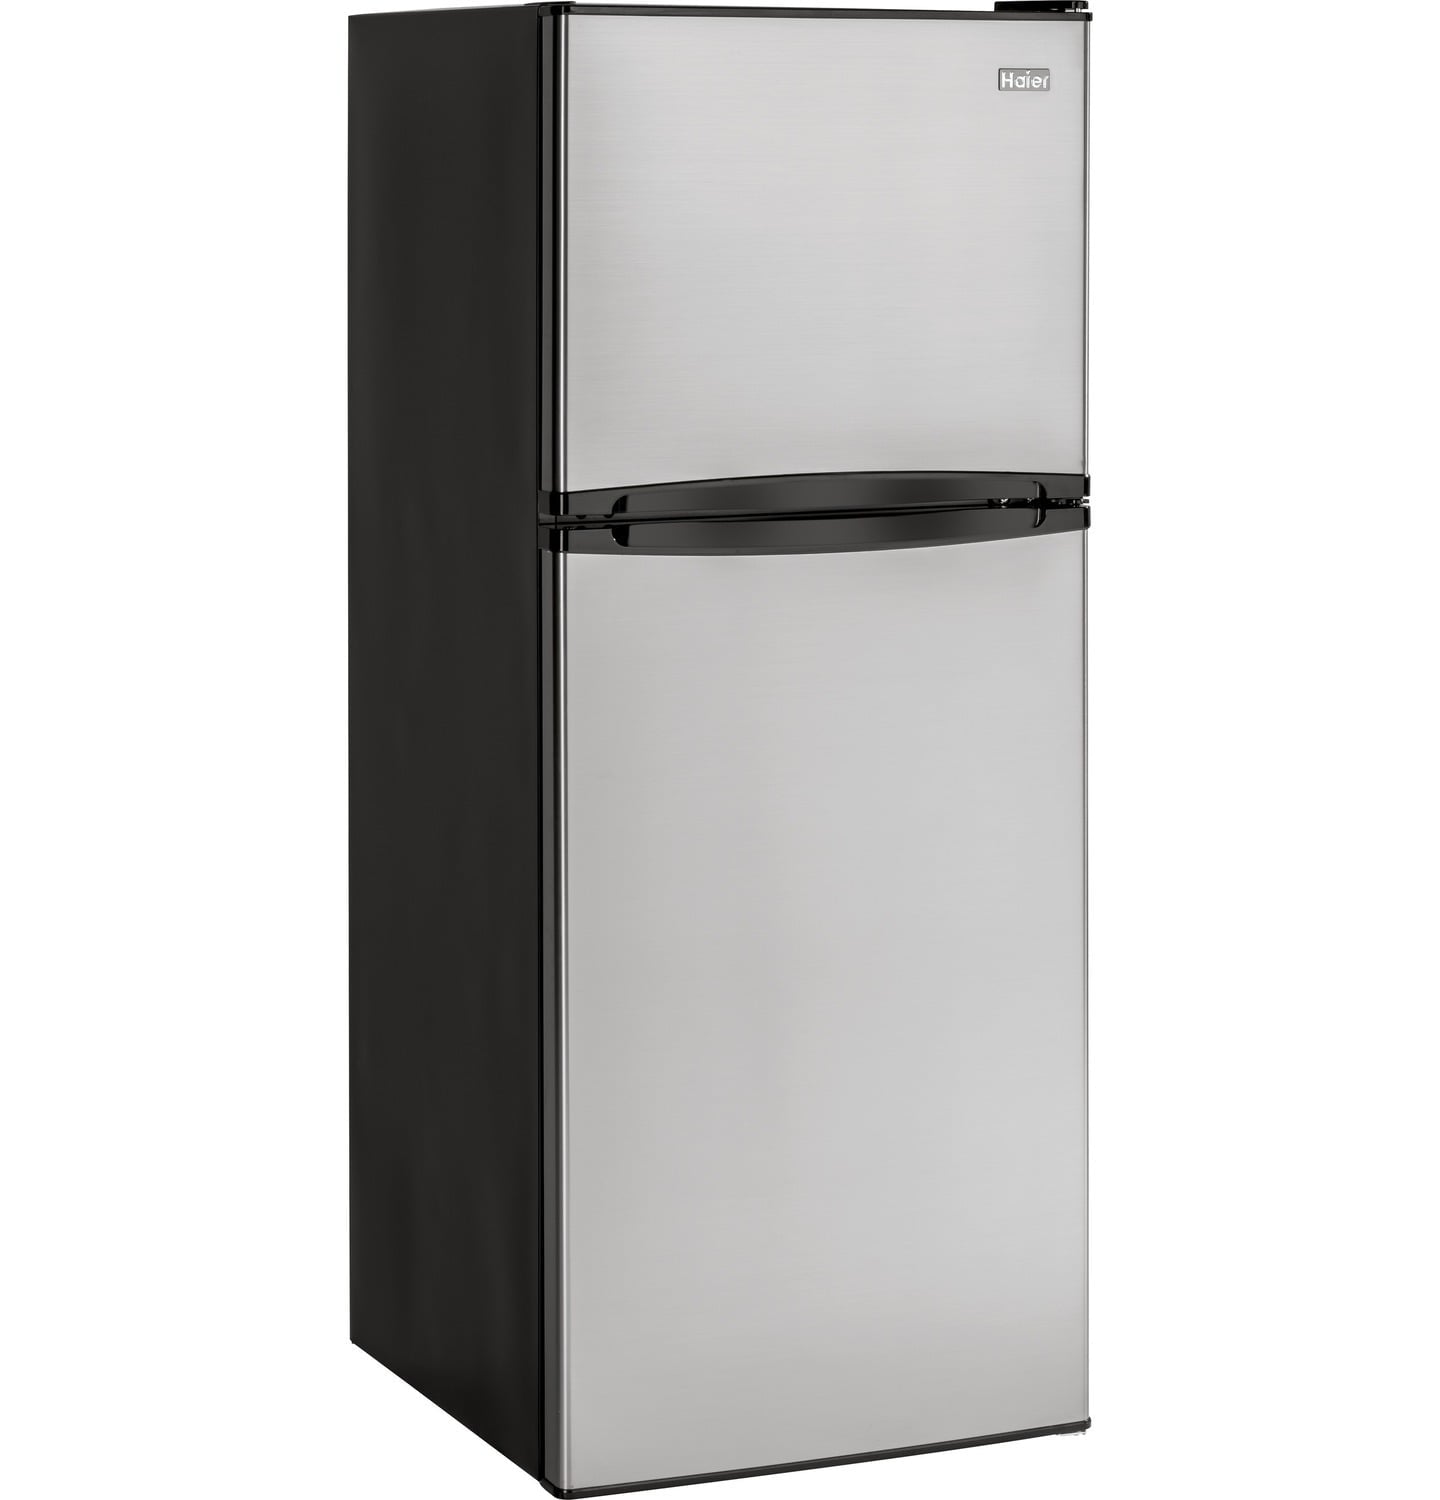 Haier HA10TG21SS 9.8 Cu. Ft. Top Freezer Refrigerator